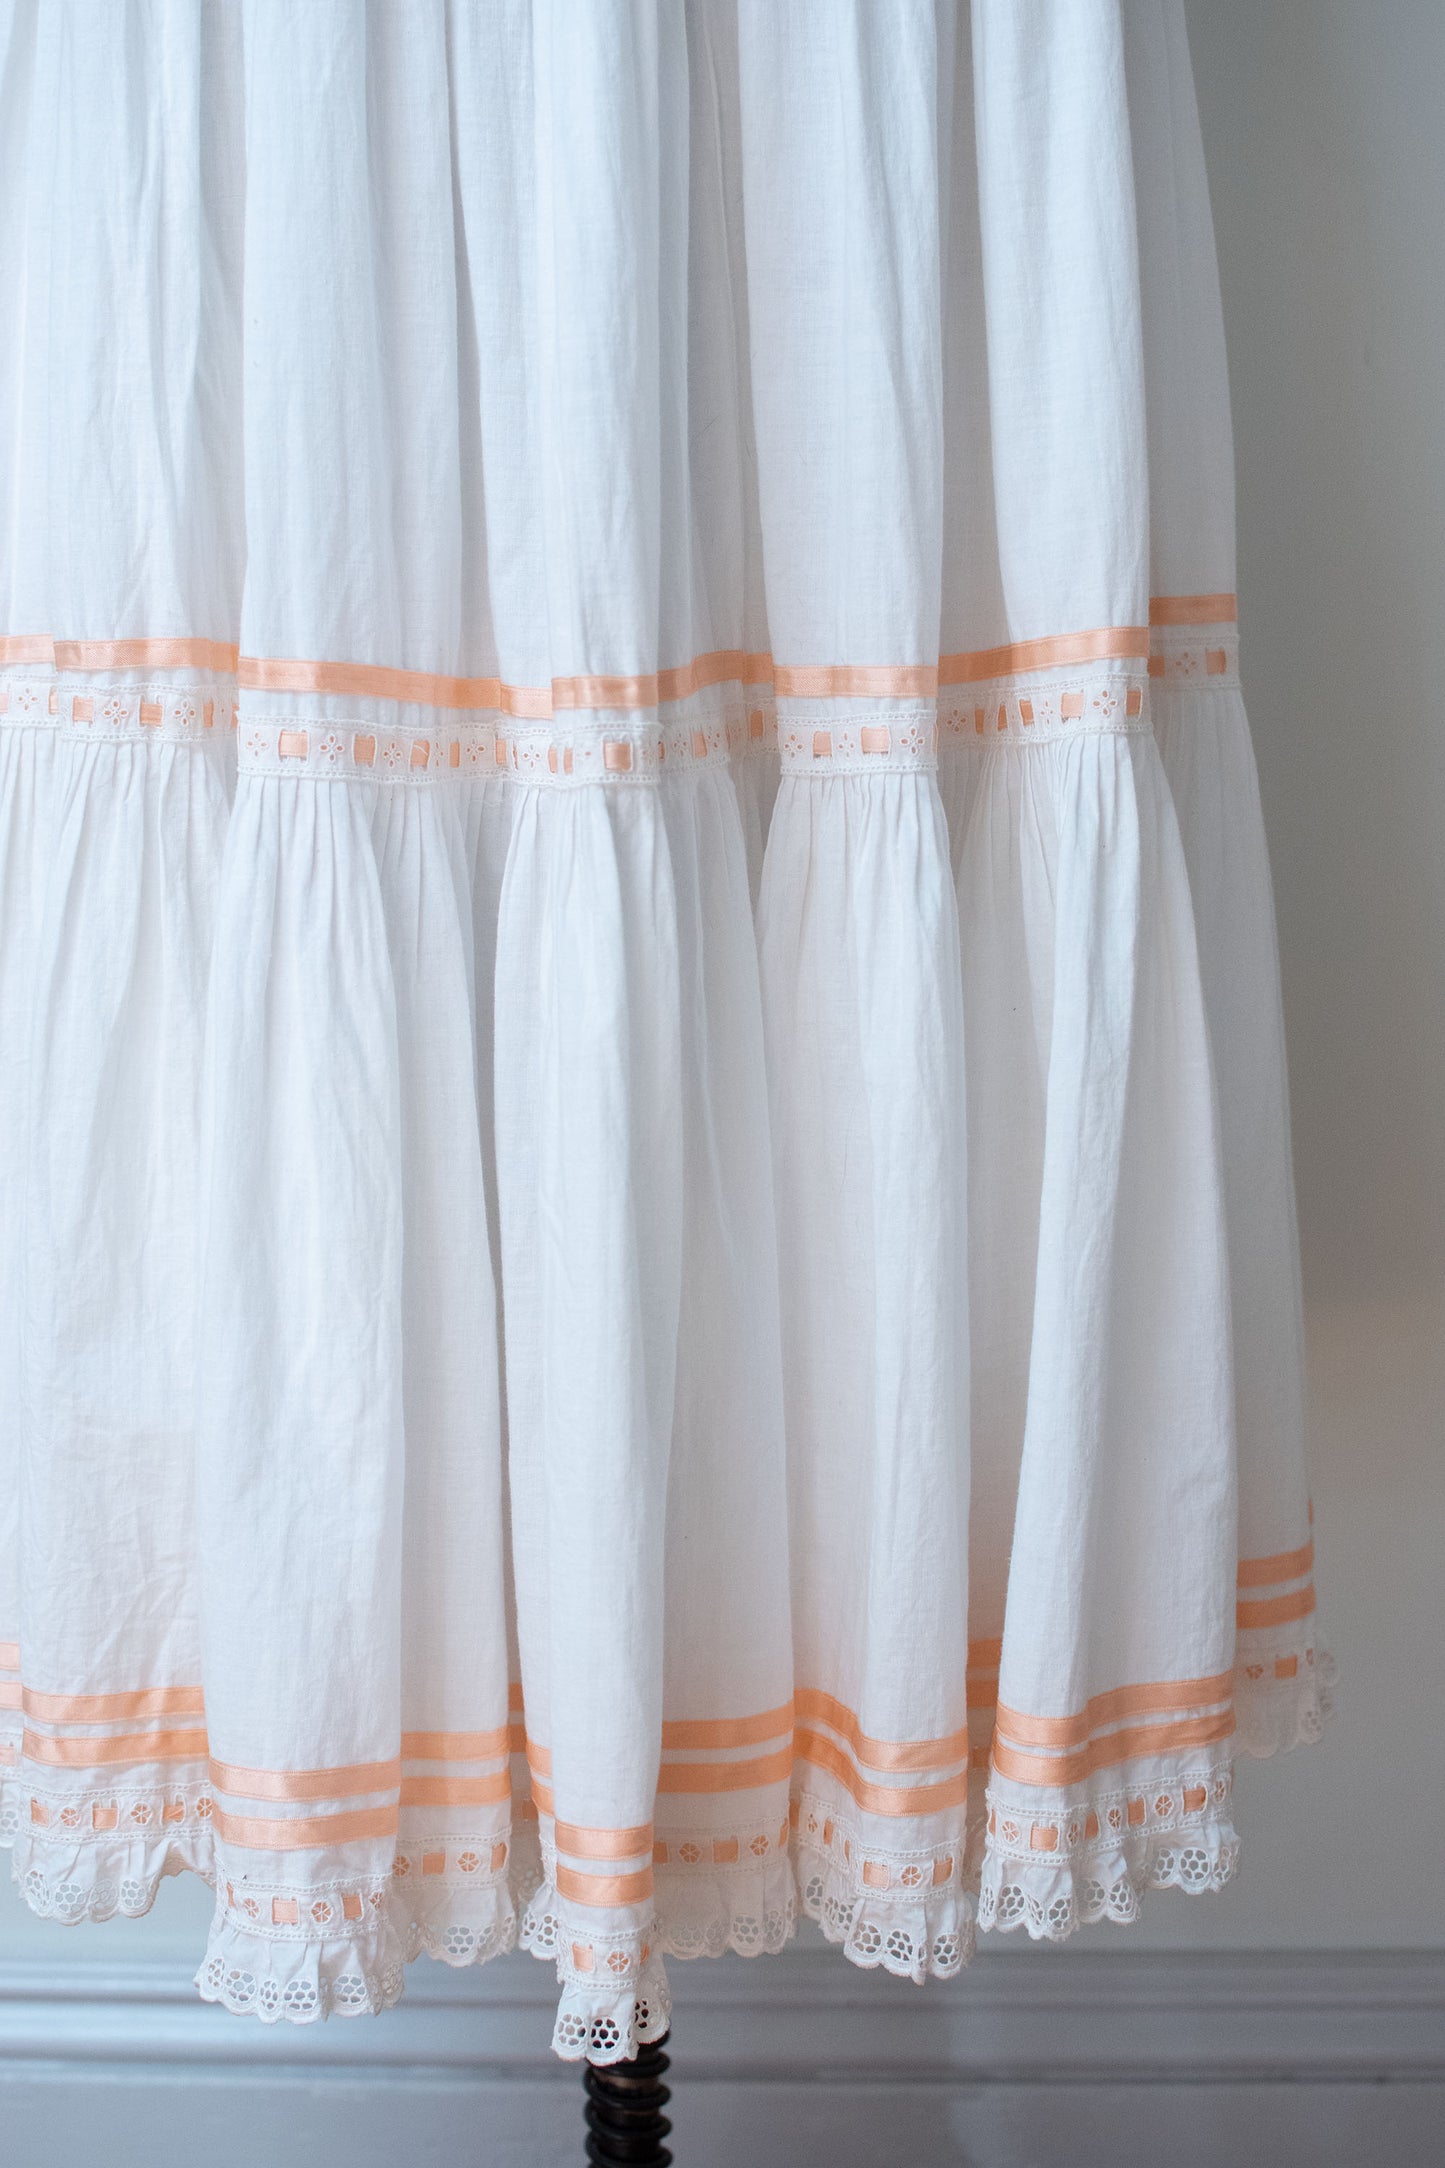 1970s Petticoat Skirt